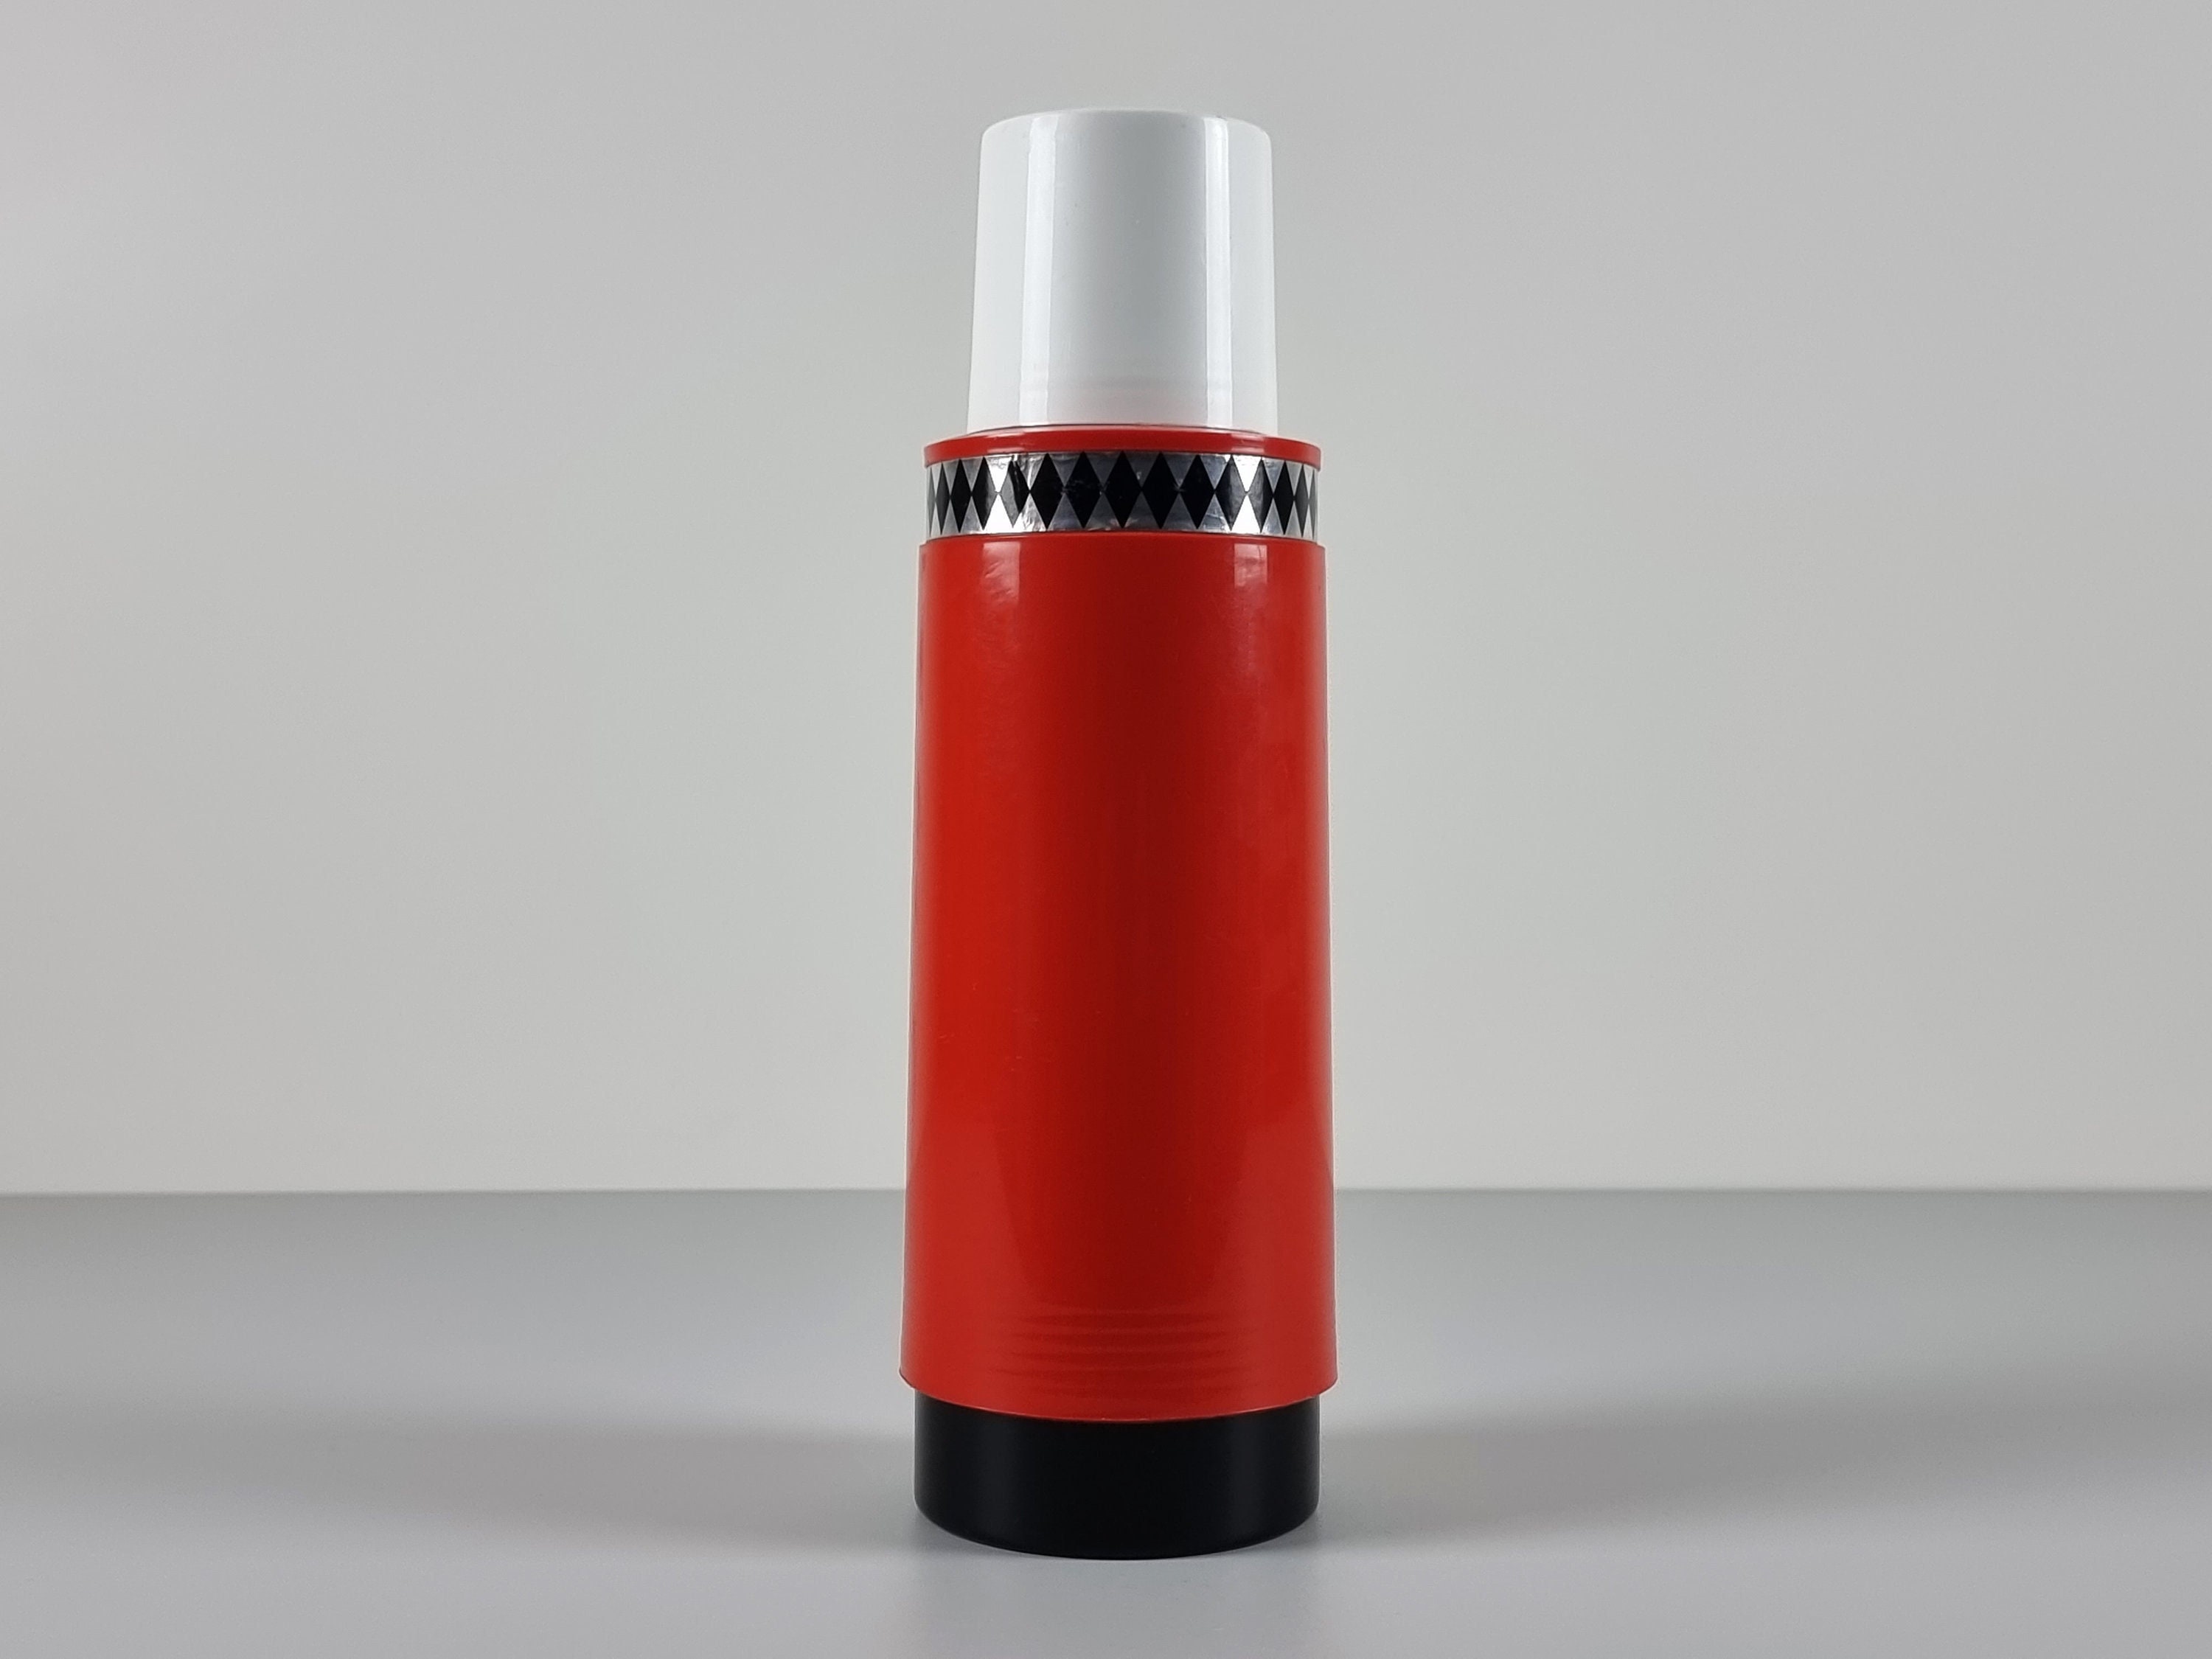 Arctic Heir 16oz Vacuum Flask Thermos w/ Tea Infuser & LED Digital  Temperature Display (Rose Gold)